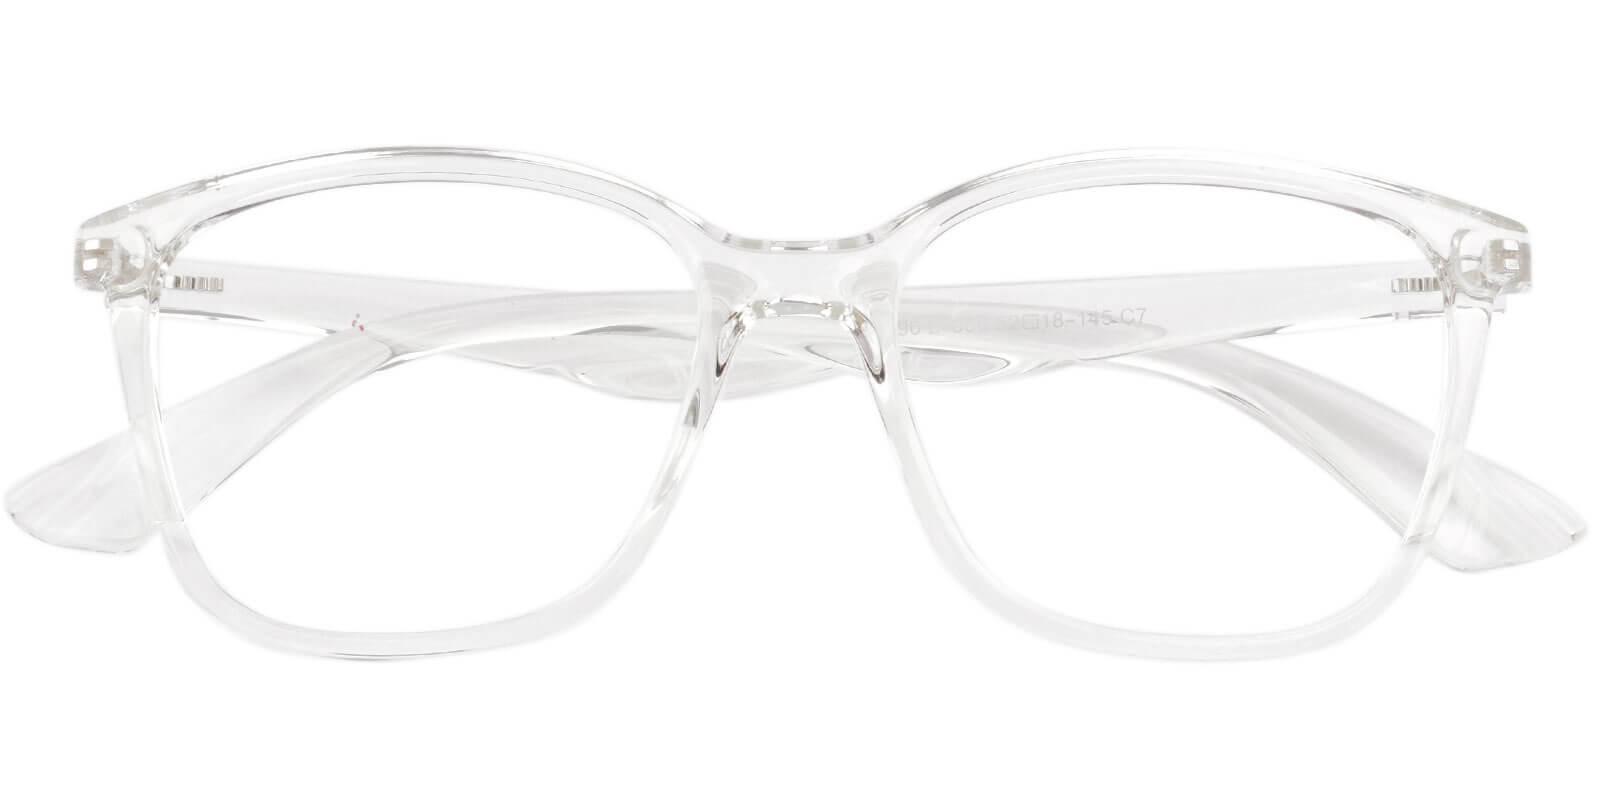 Northern Translucent TR Eyeglasses , UniversalBridgeFit Frames from ABBE Glasses